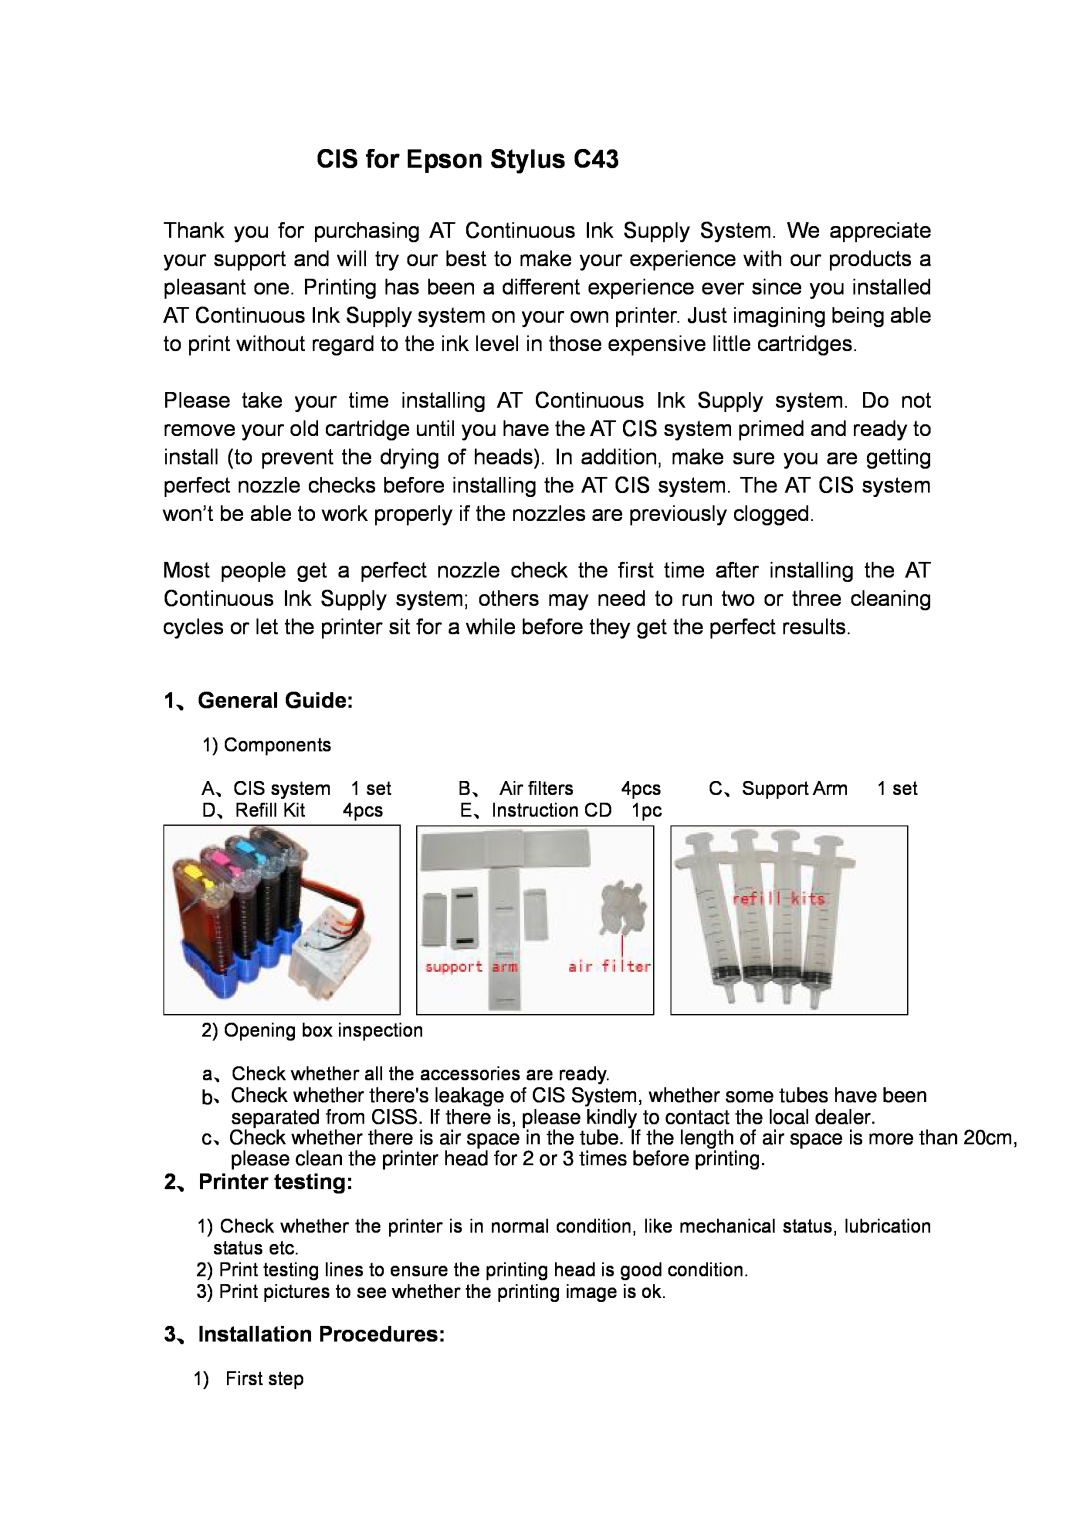 Epson manual CIS for Epson Stylus C43, 1、General Guide, 2、Printer testing, 3、Installation Procedures 